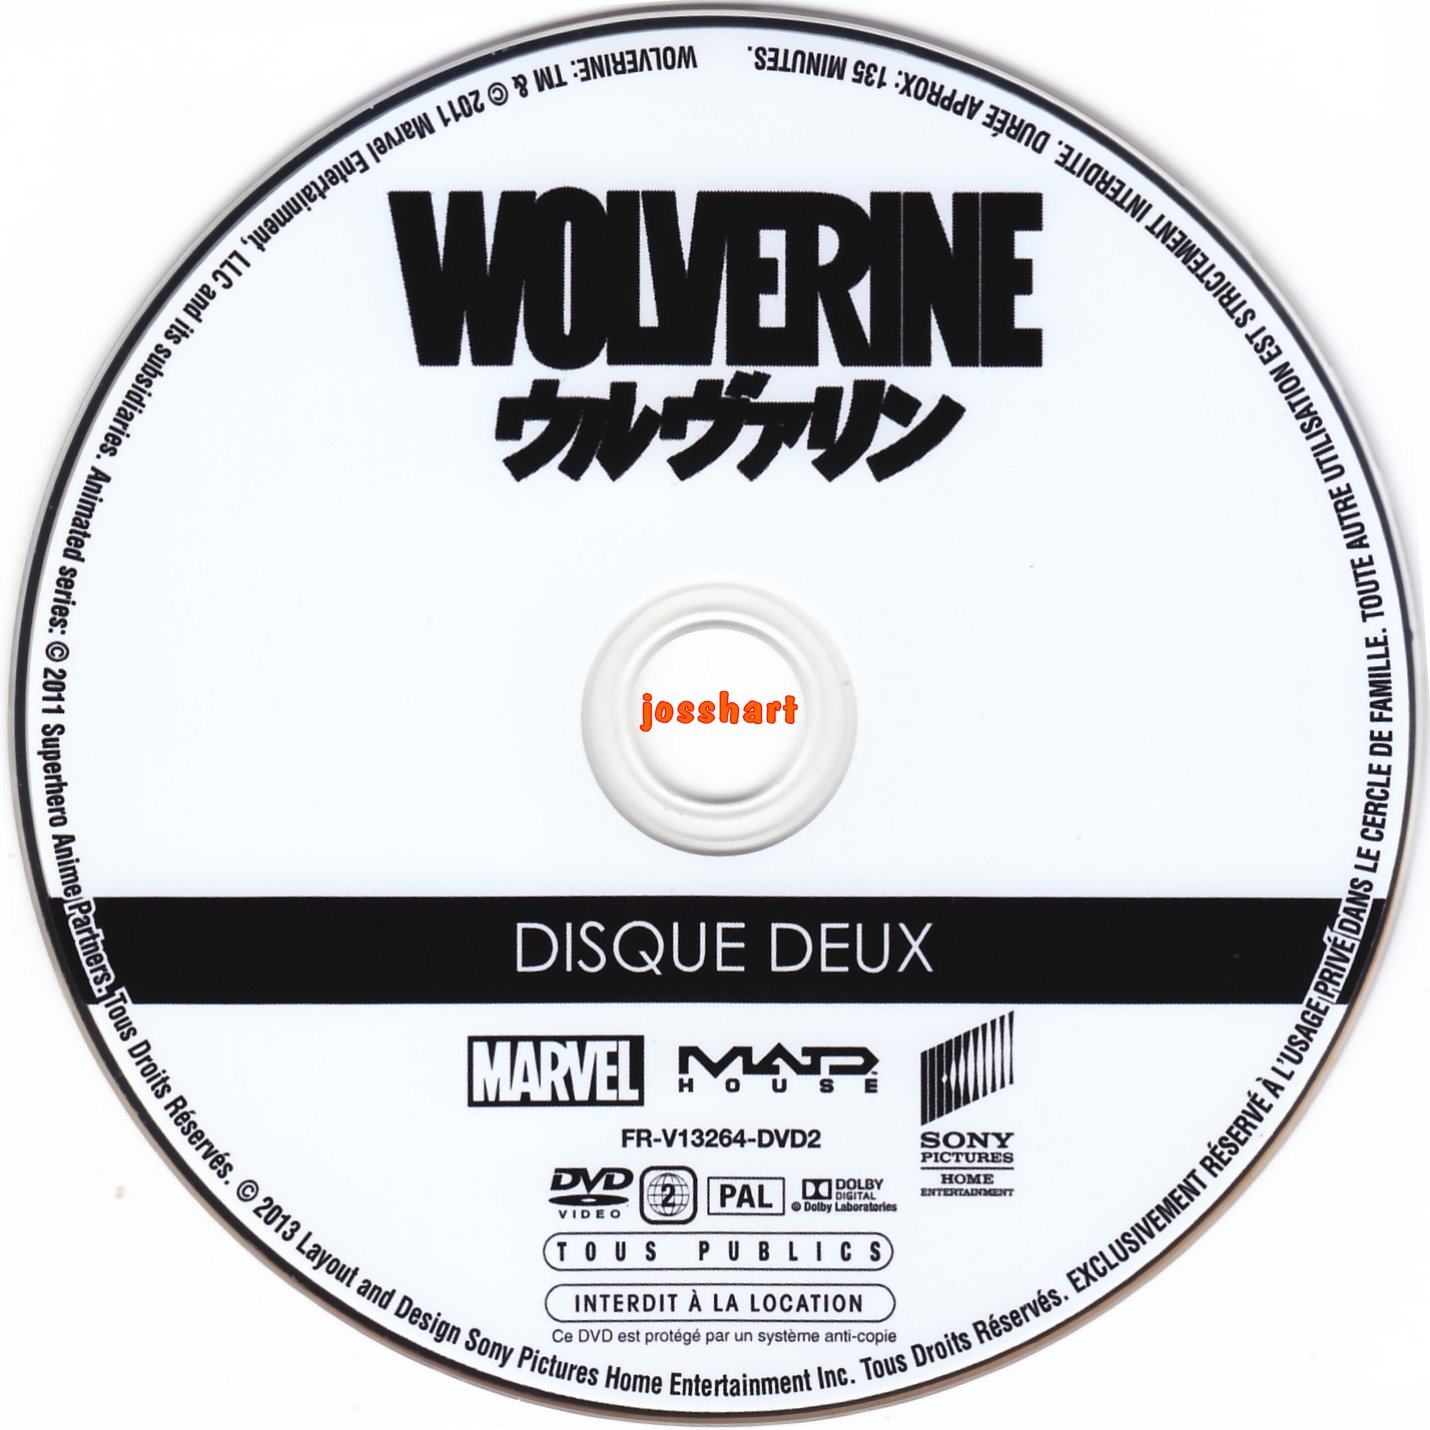 Wolverine la srie anime Disc 2